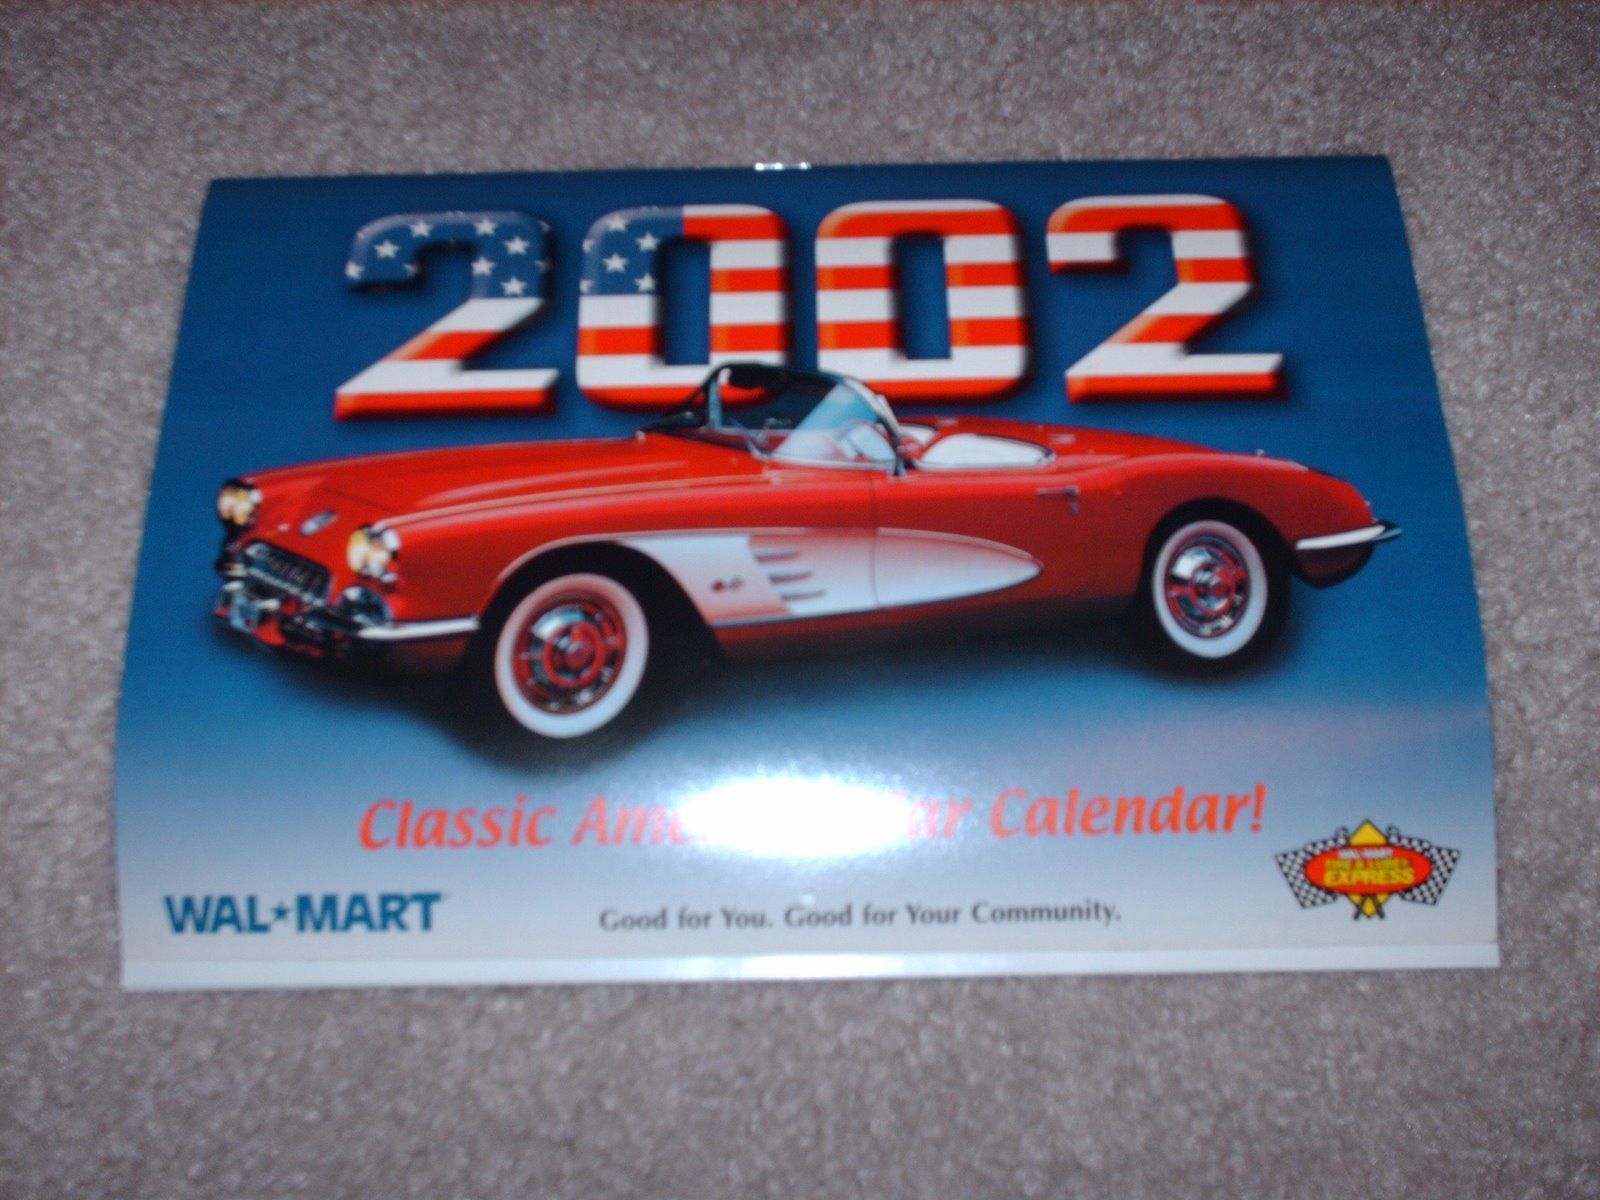 Primary image for 2002 Classic American Car Calendar Corvette Cover 